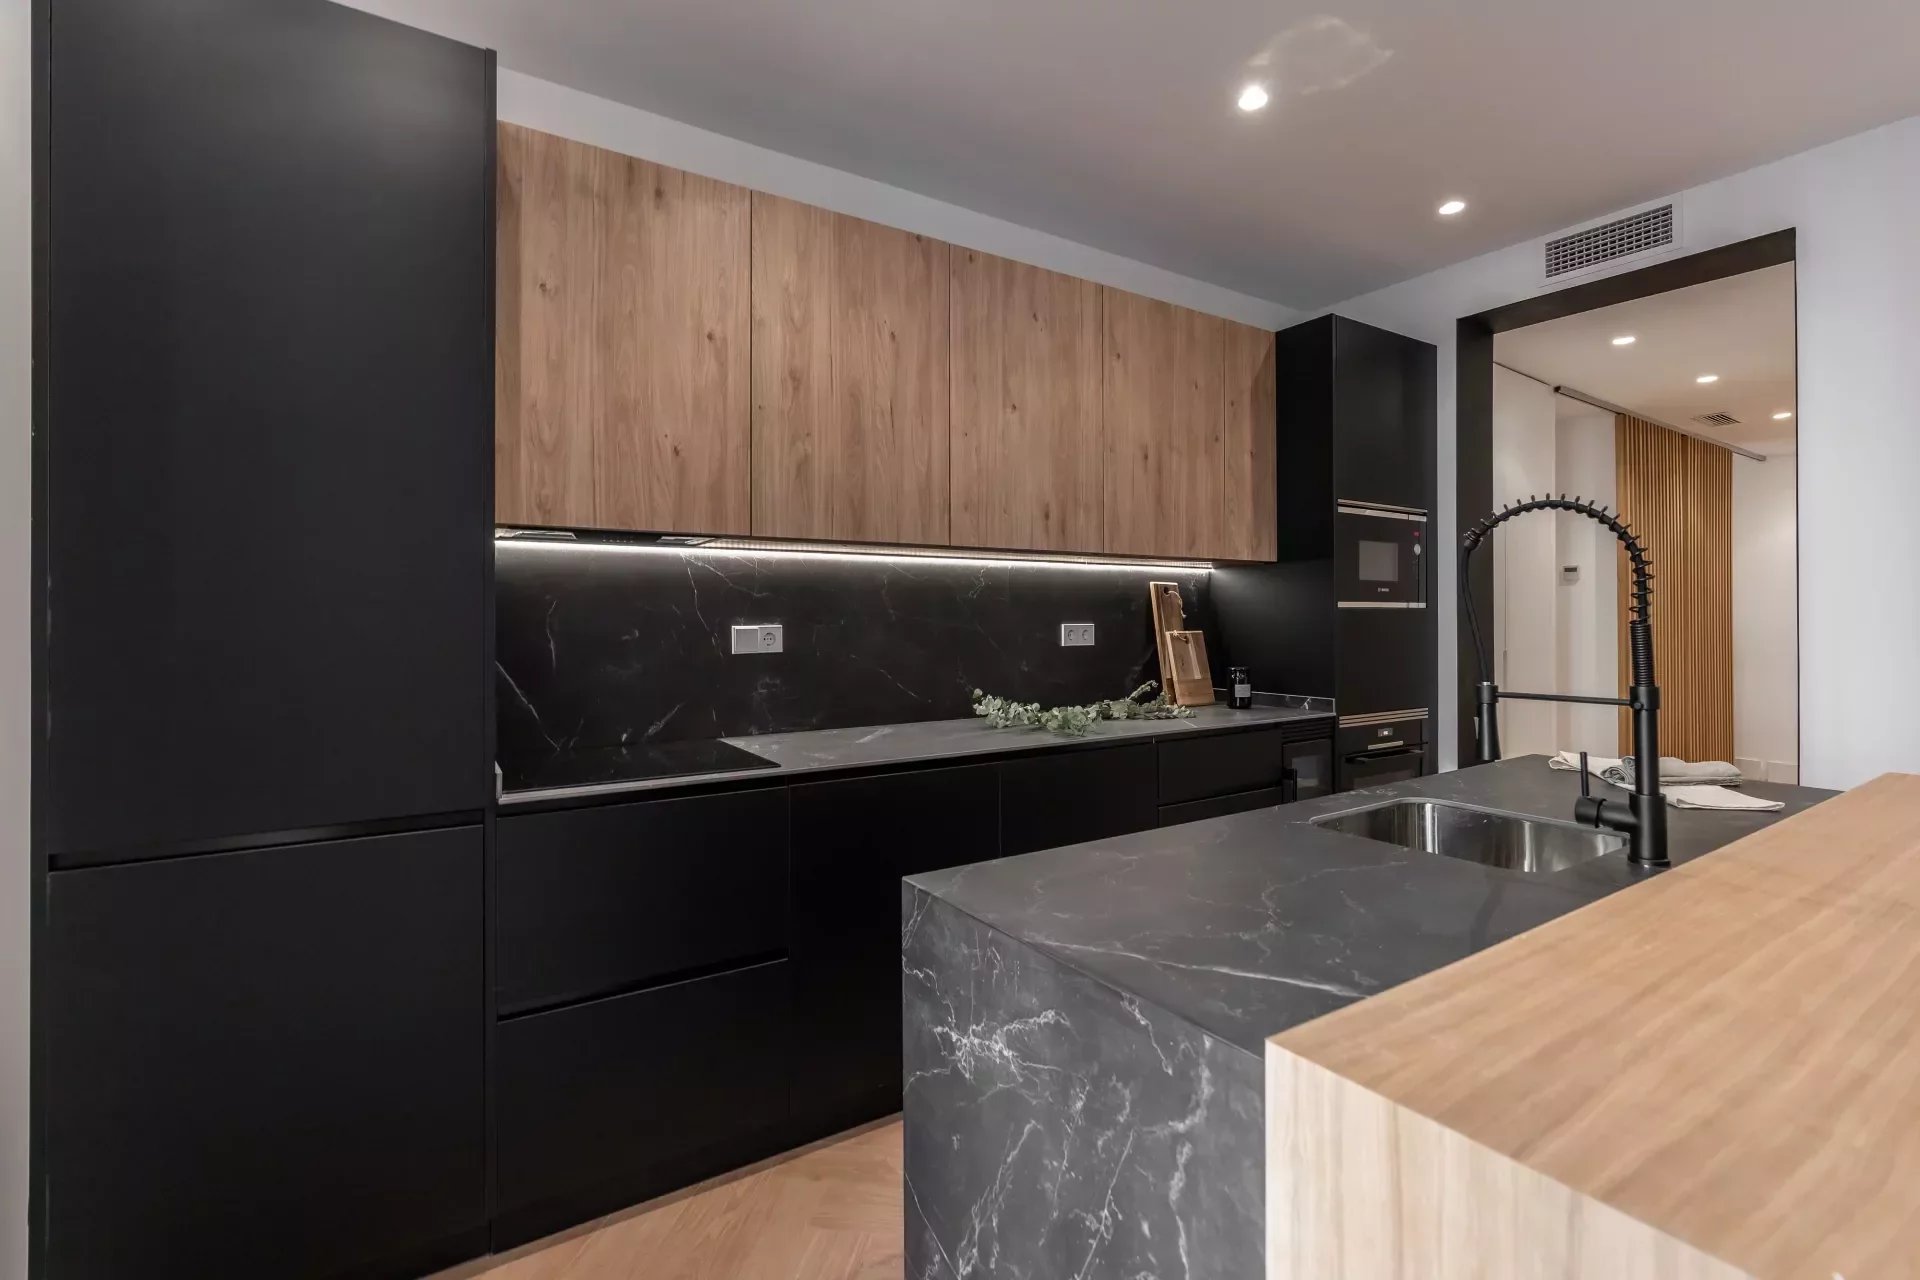 Luxury apartment for sale in Trafalgar